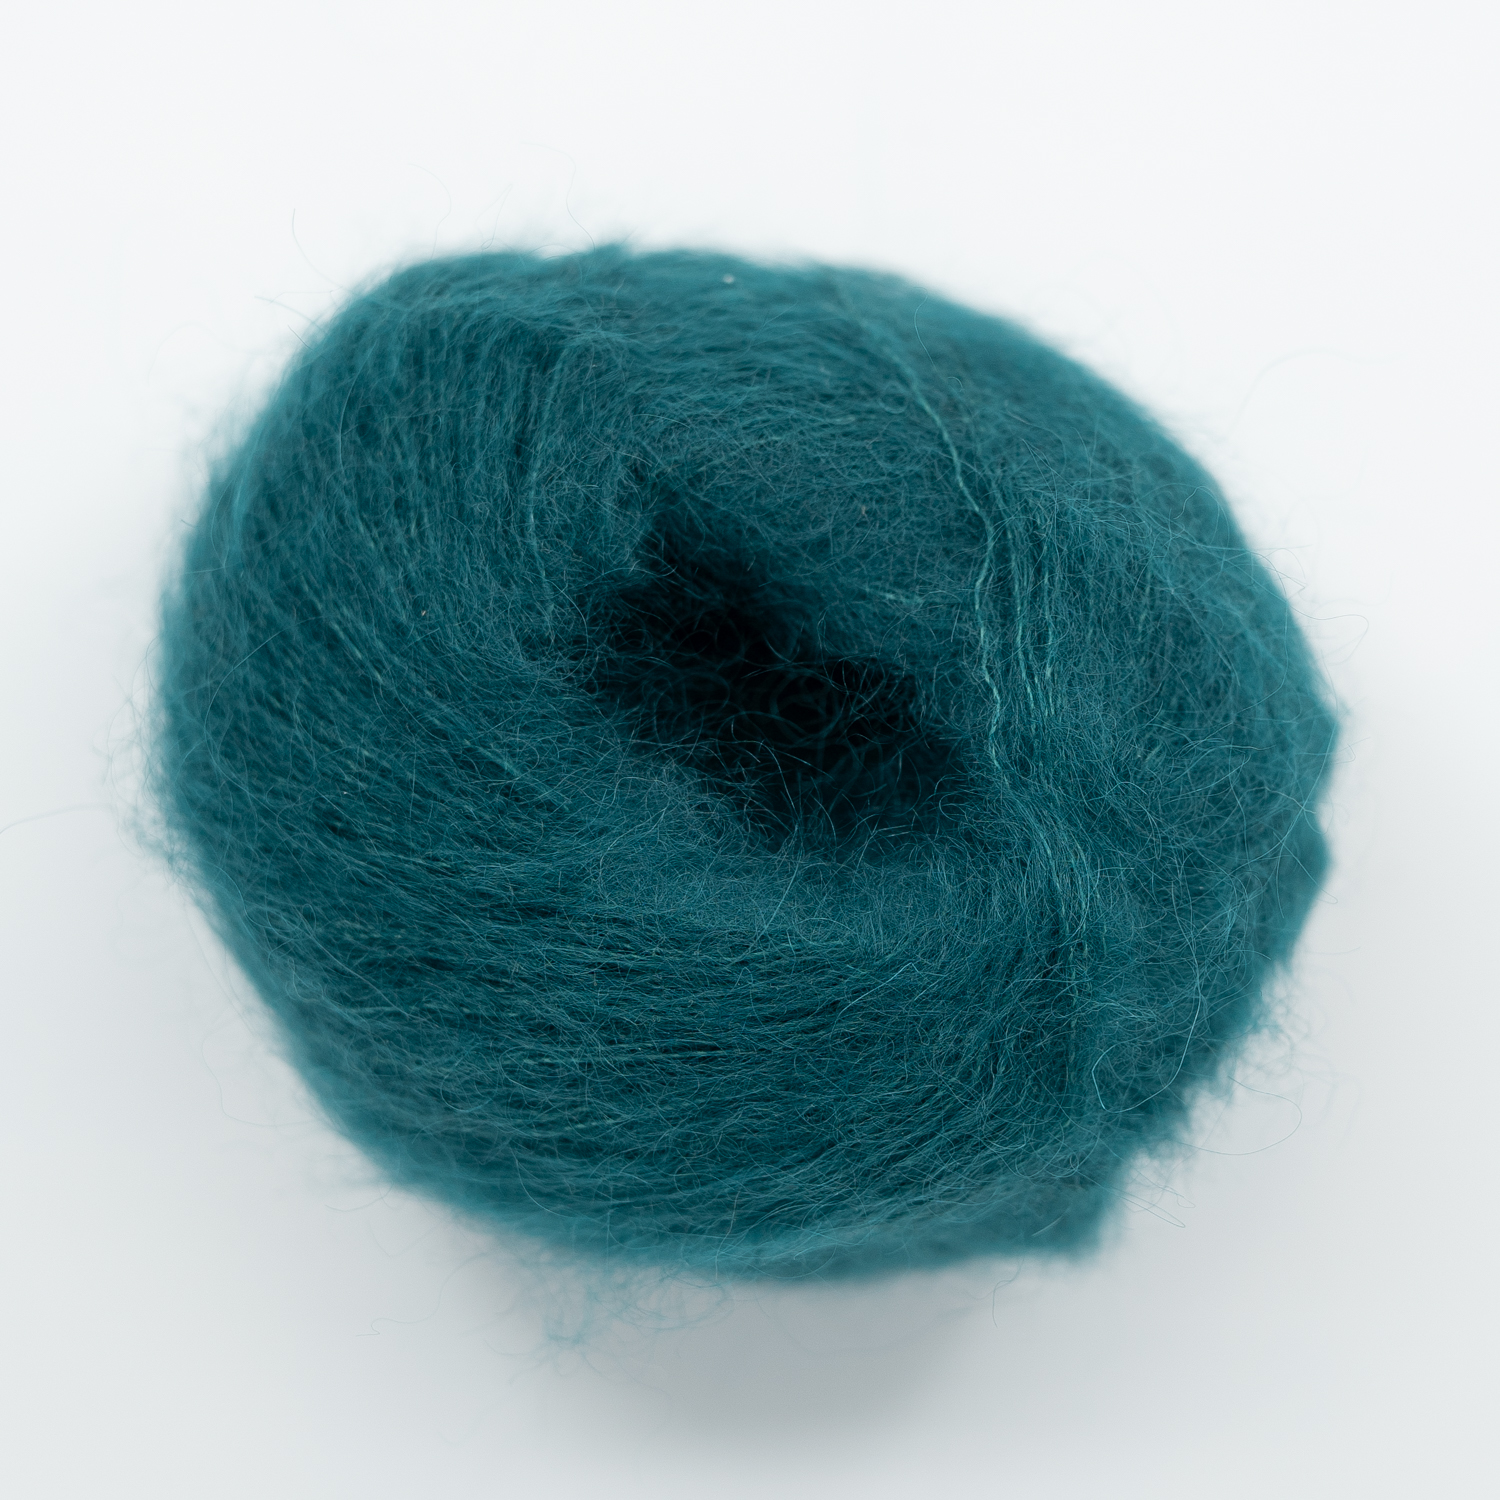  - Emerald green | Hip Mohair yarn - by HipKnitShop - 09/03/2020